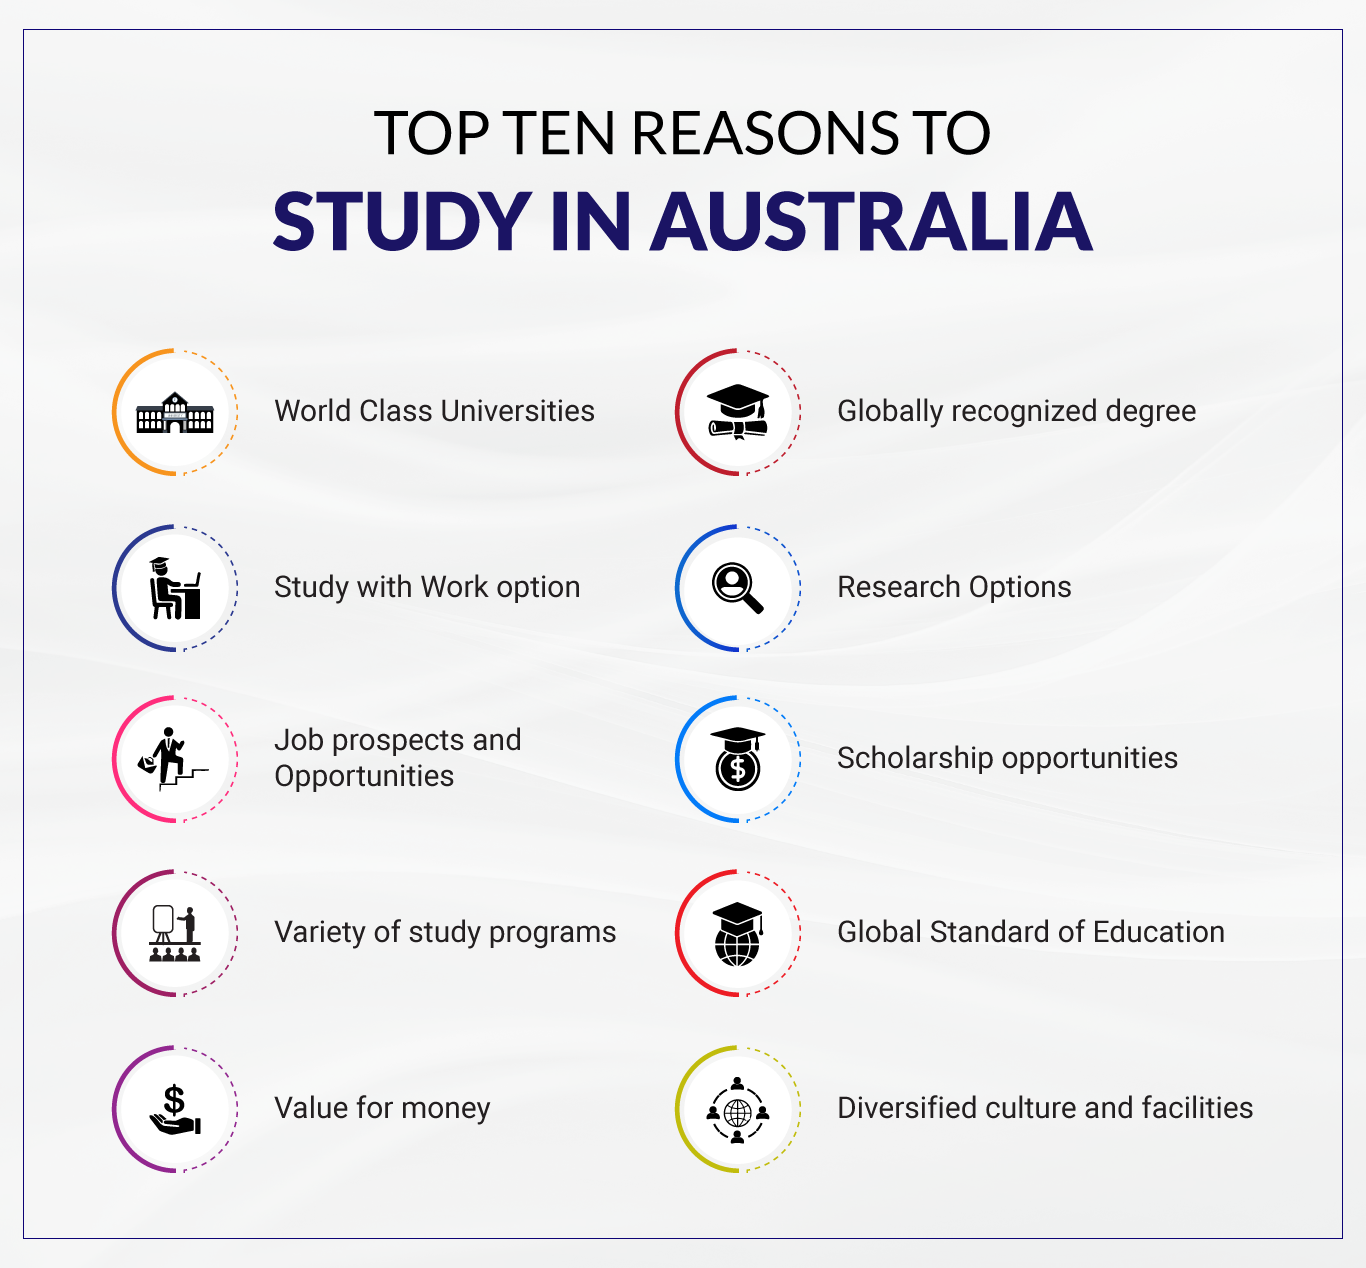 Reasons to study in Australia